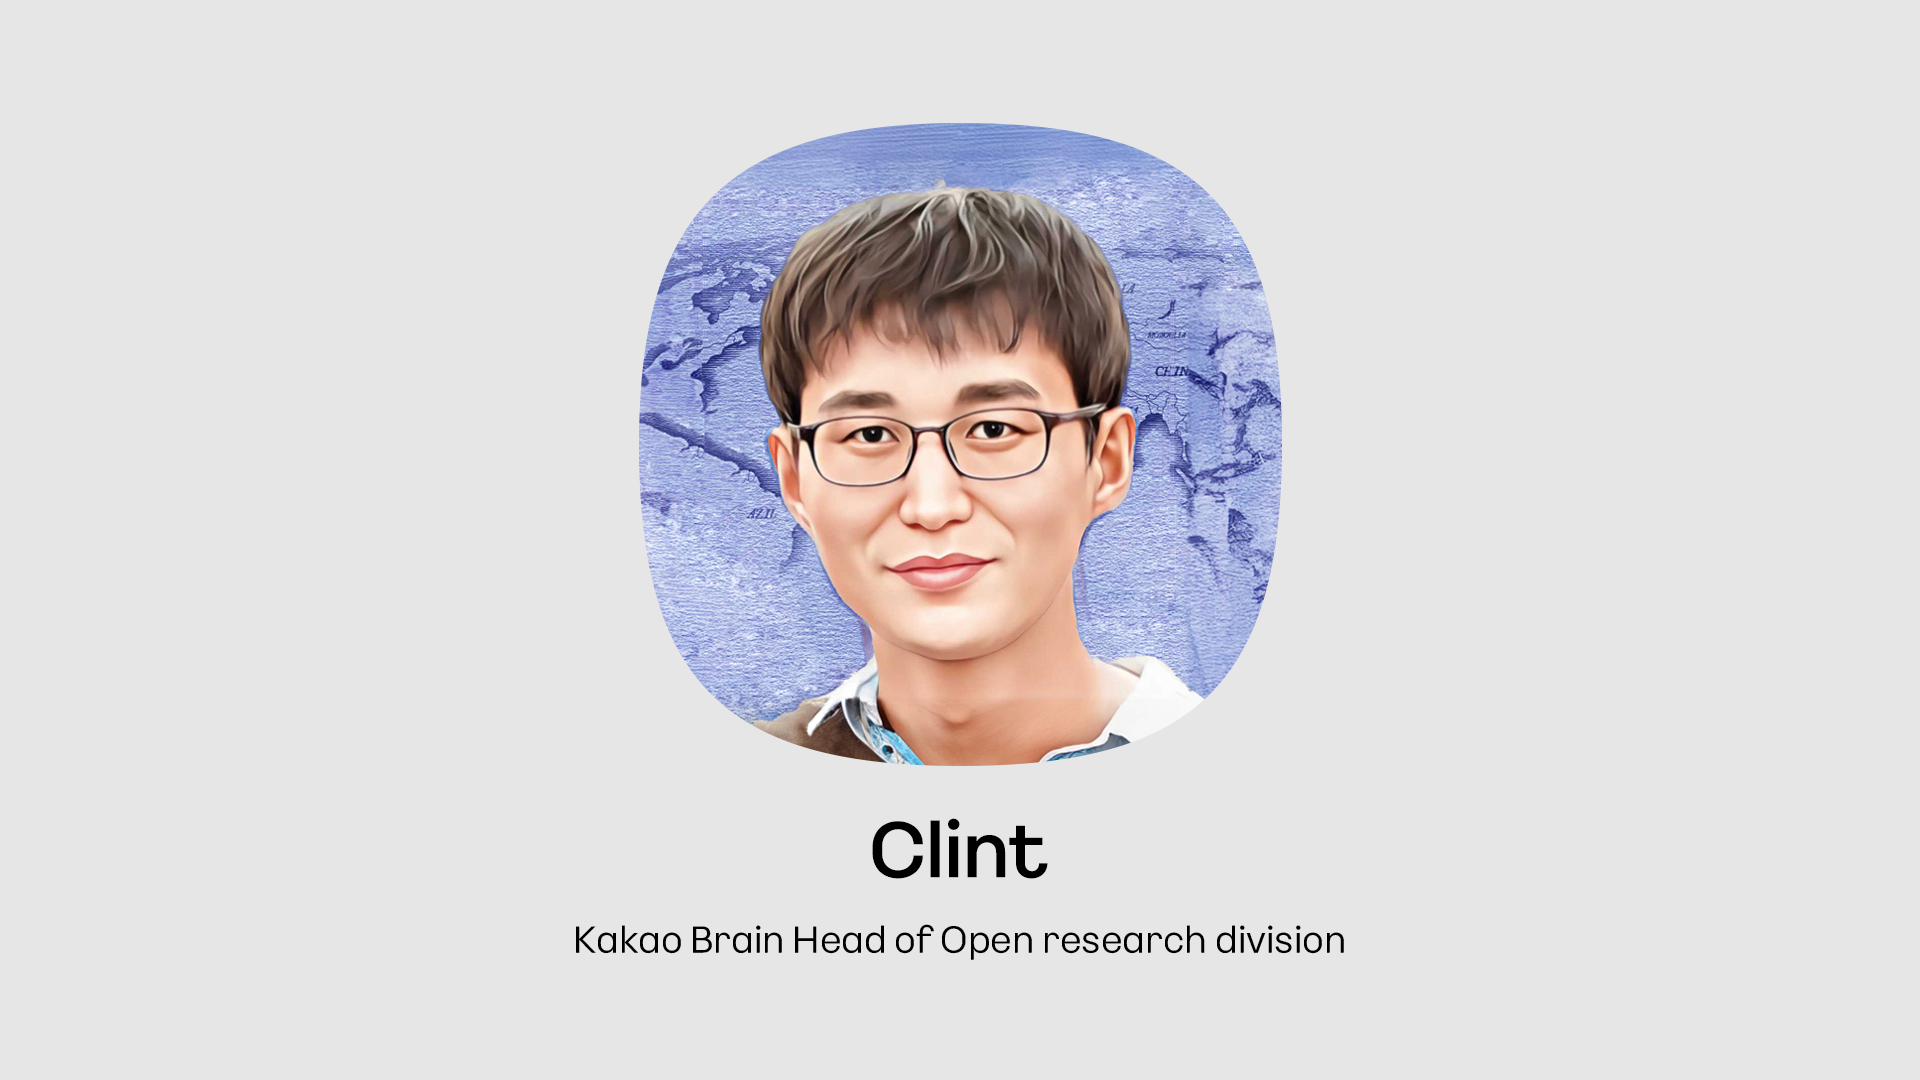 Clint profile image (Kakao Brain Open Research Division Head)